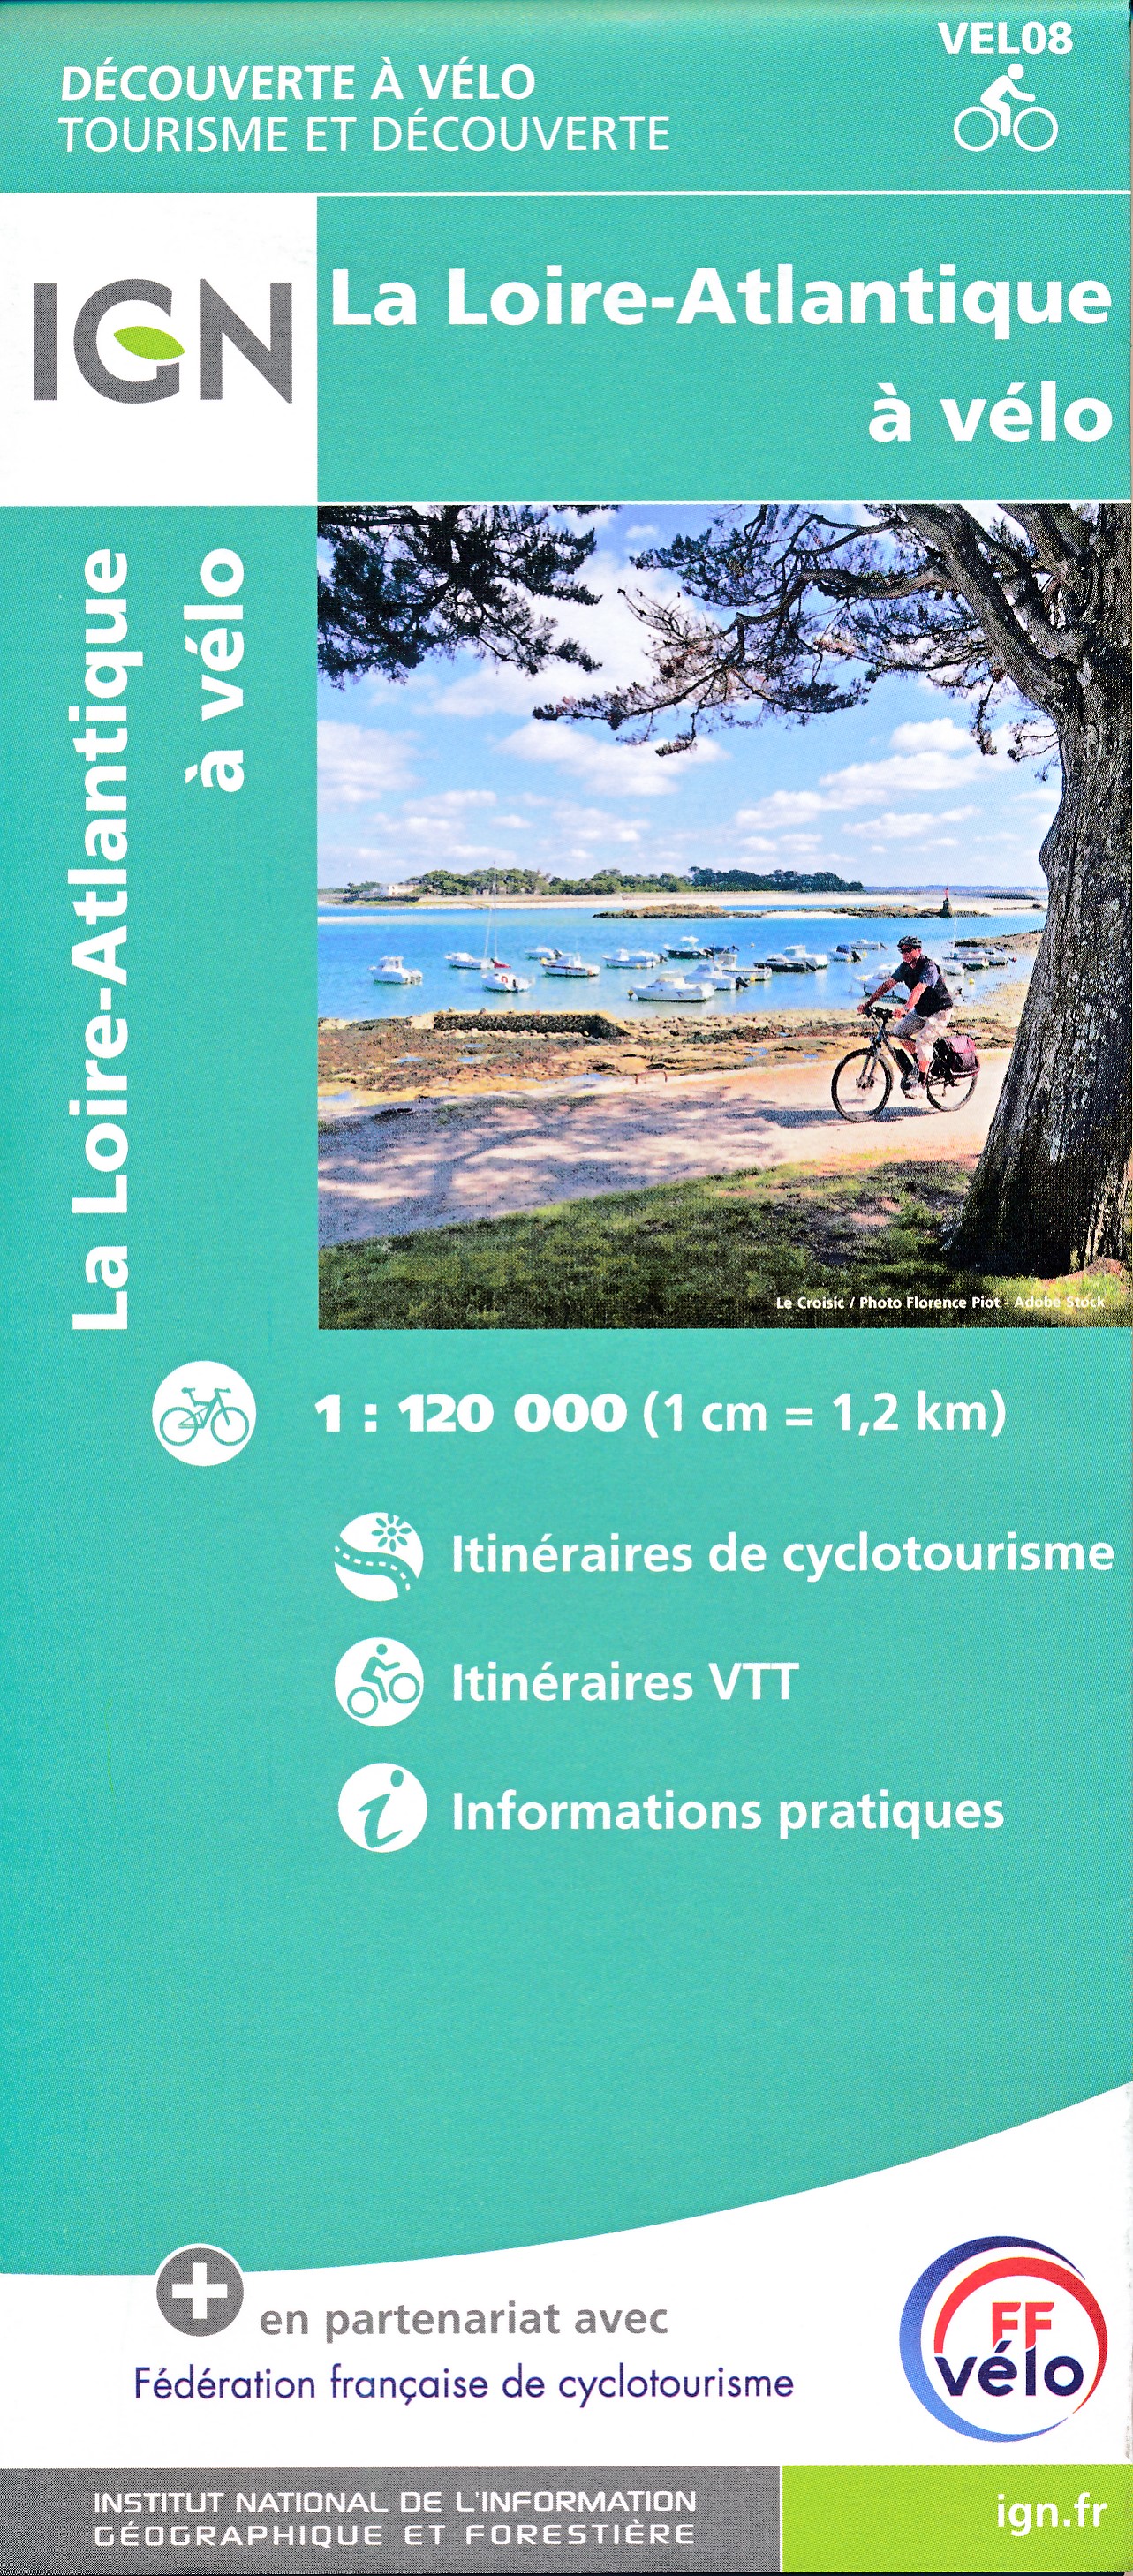 Online bestellen: Fietskaart 08 Velo Loire-Atlantique a velo - by bike | IGN - Institut Géographique National